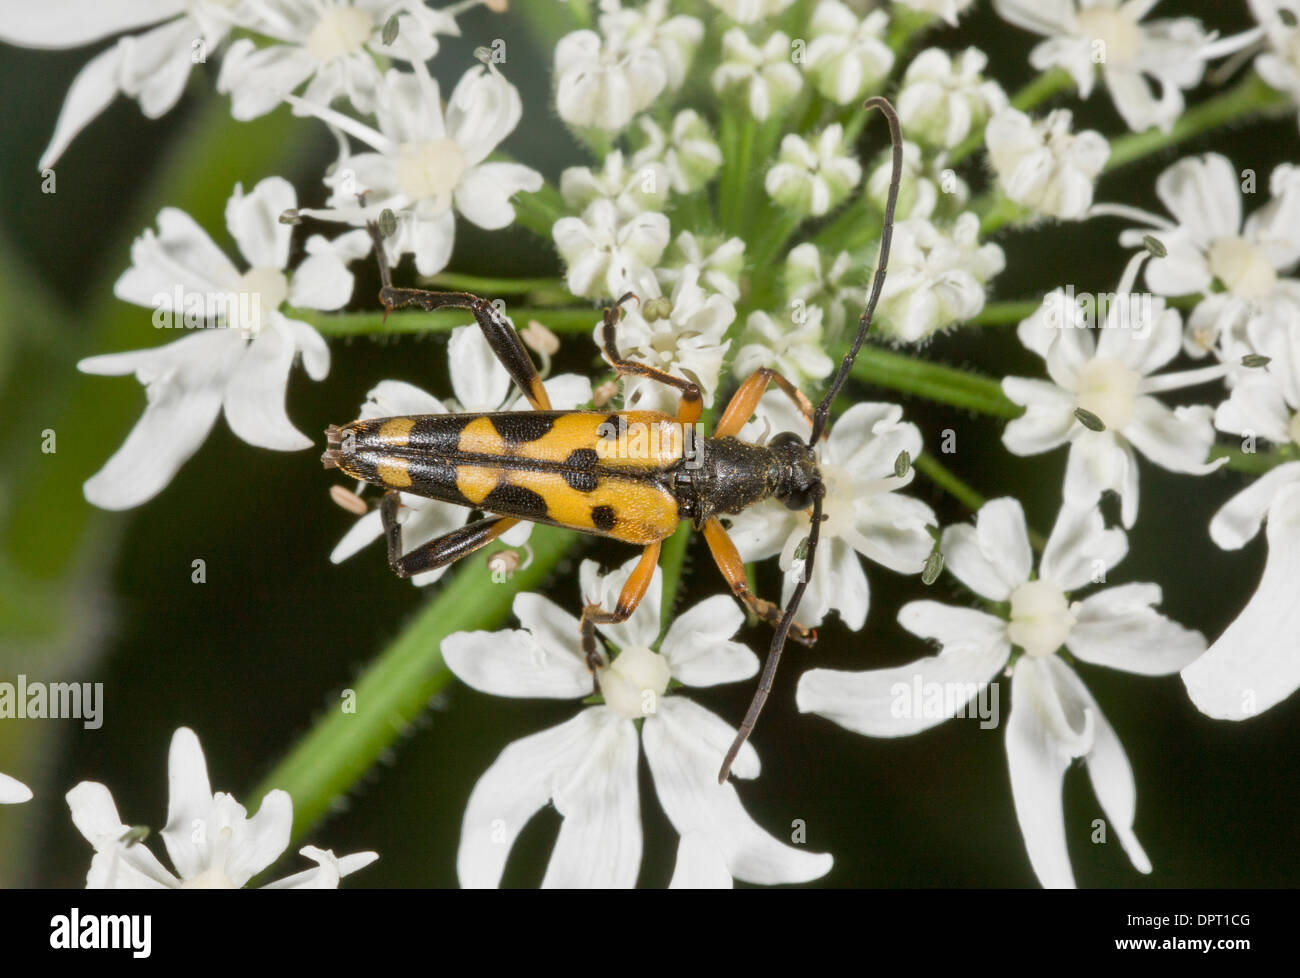 A common longhorn beetle, Strangalia maculata feeding on umbellifer flowers. Stock Photo